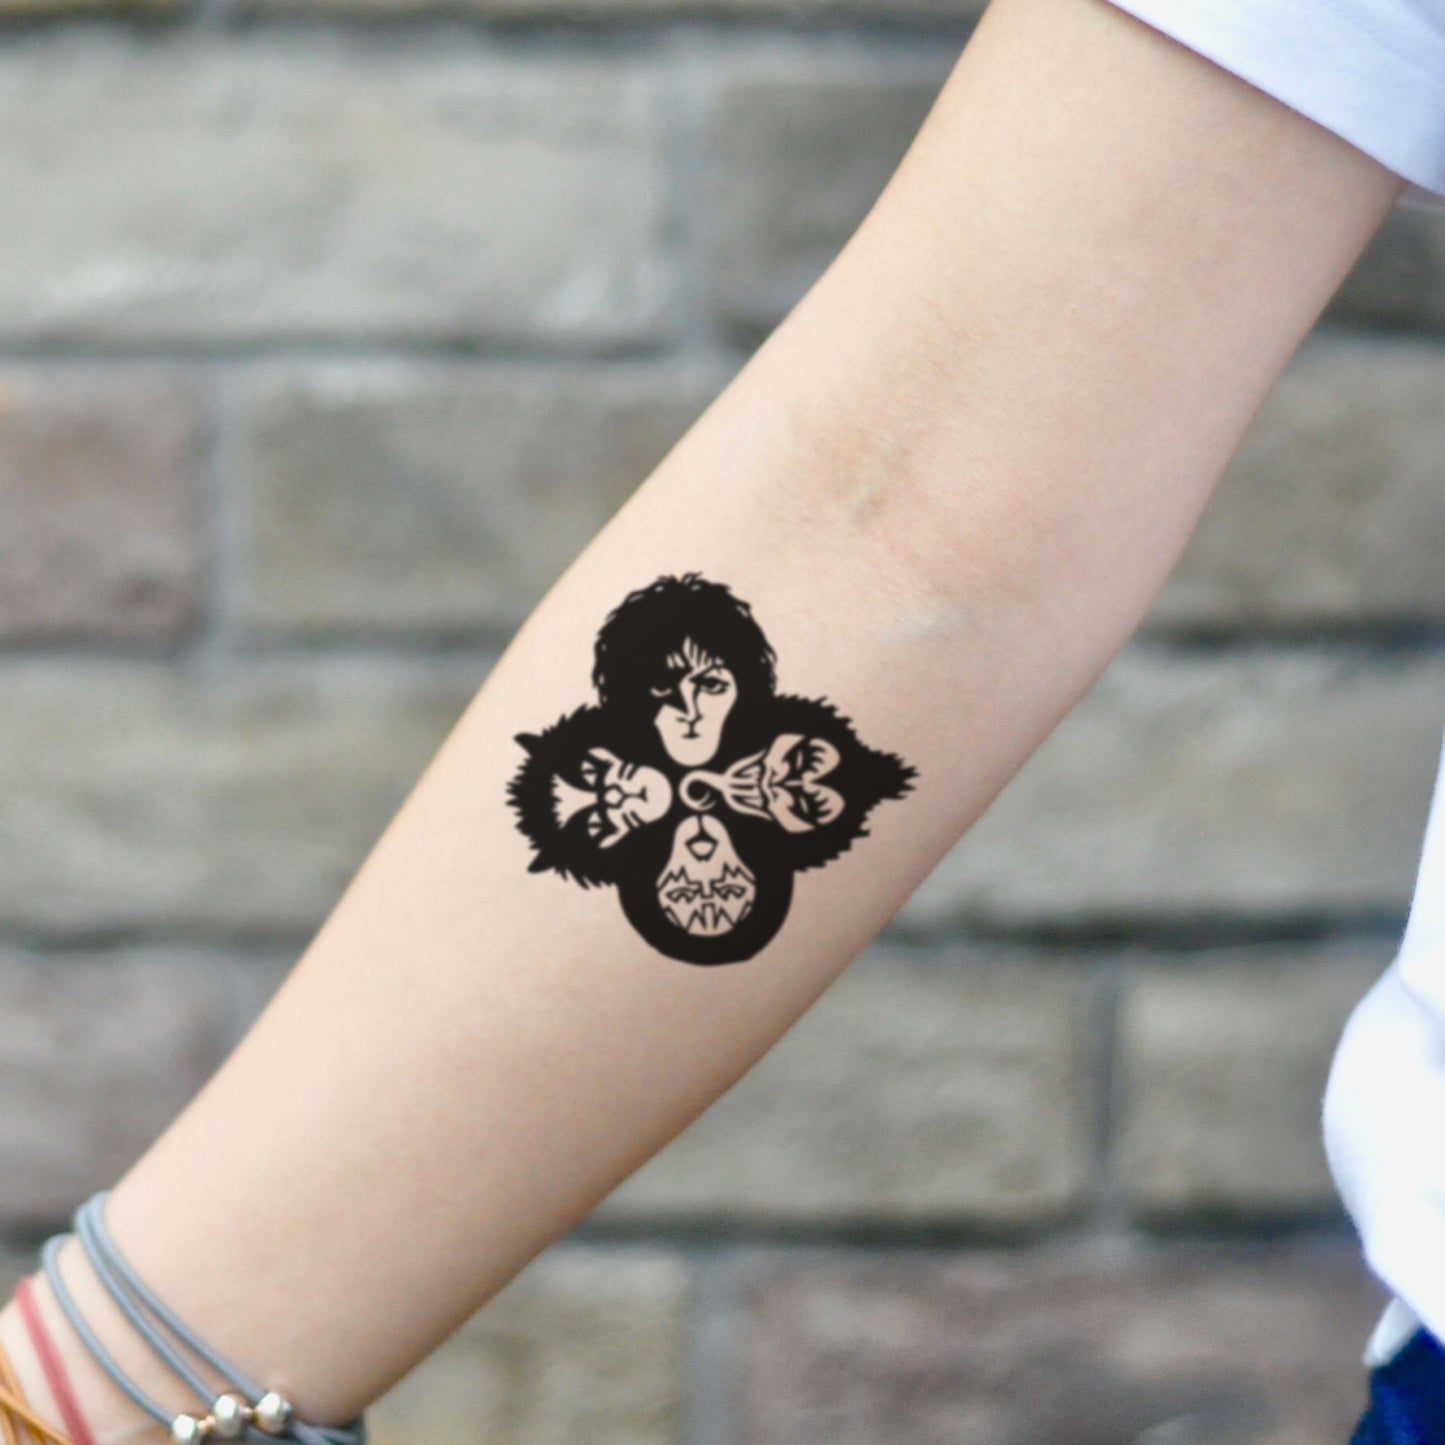 fake small kiss band illustrative temporary tattoo sticker design idea on inner arm